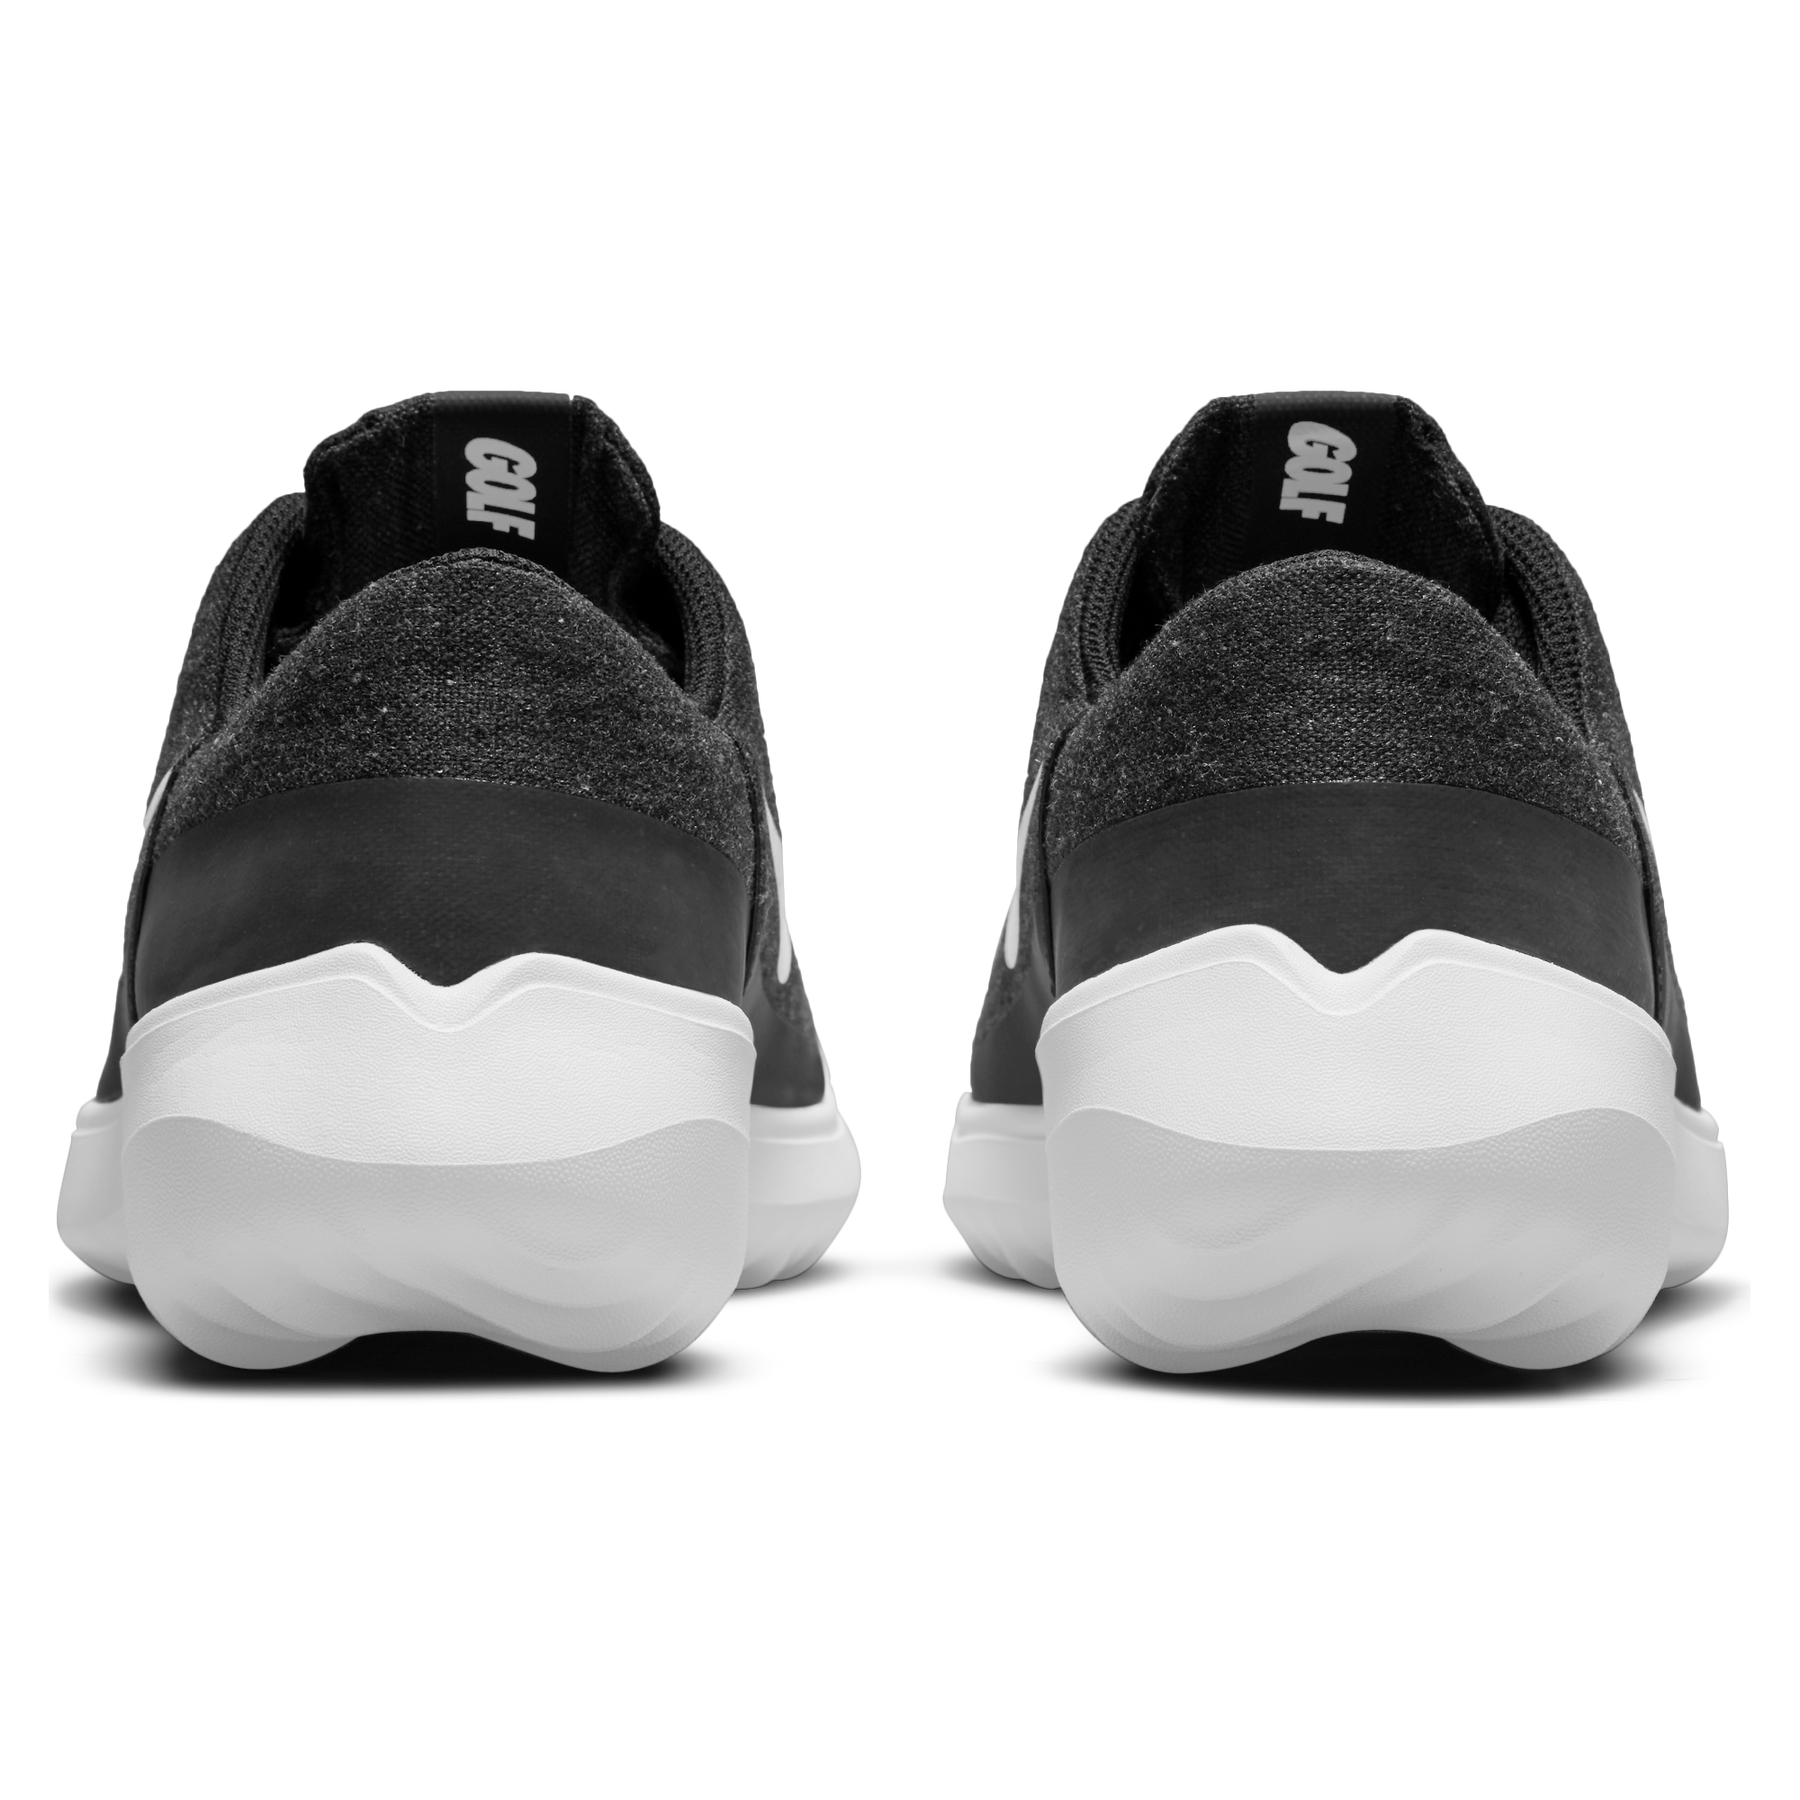 Nike Victory G Lite (Black/White) - Desirable Golf